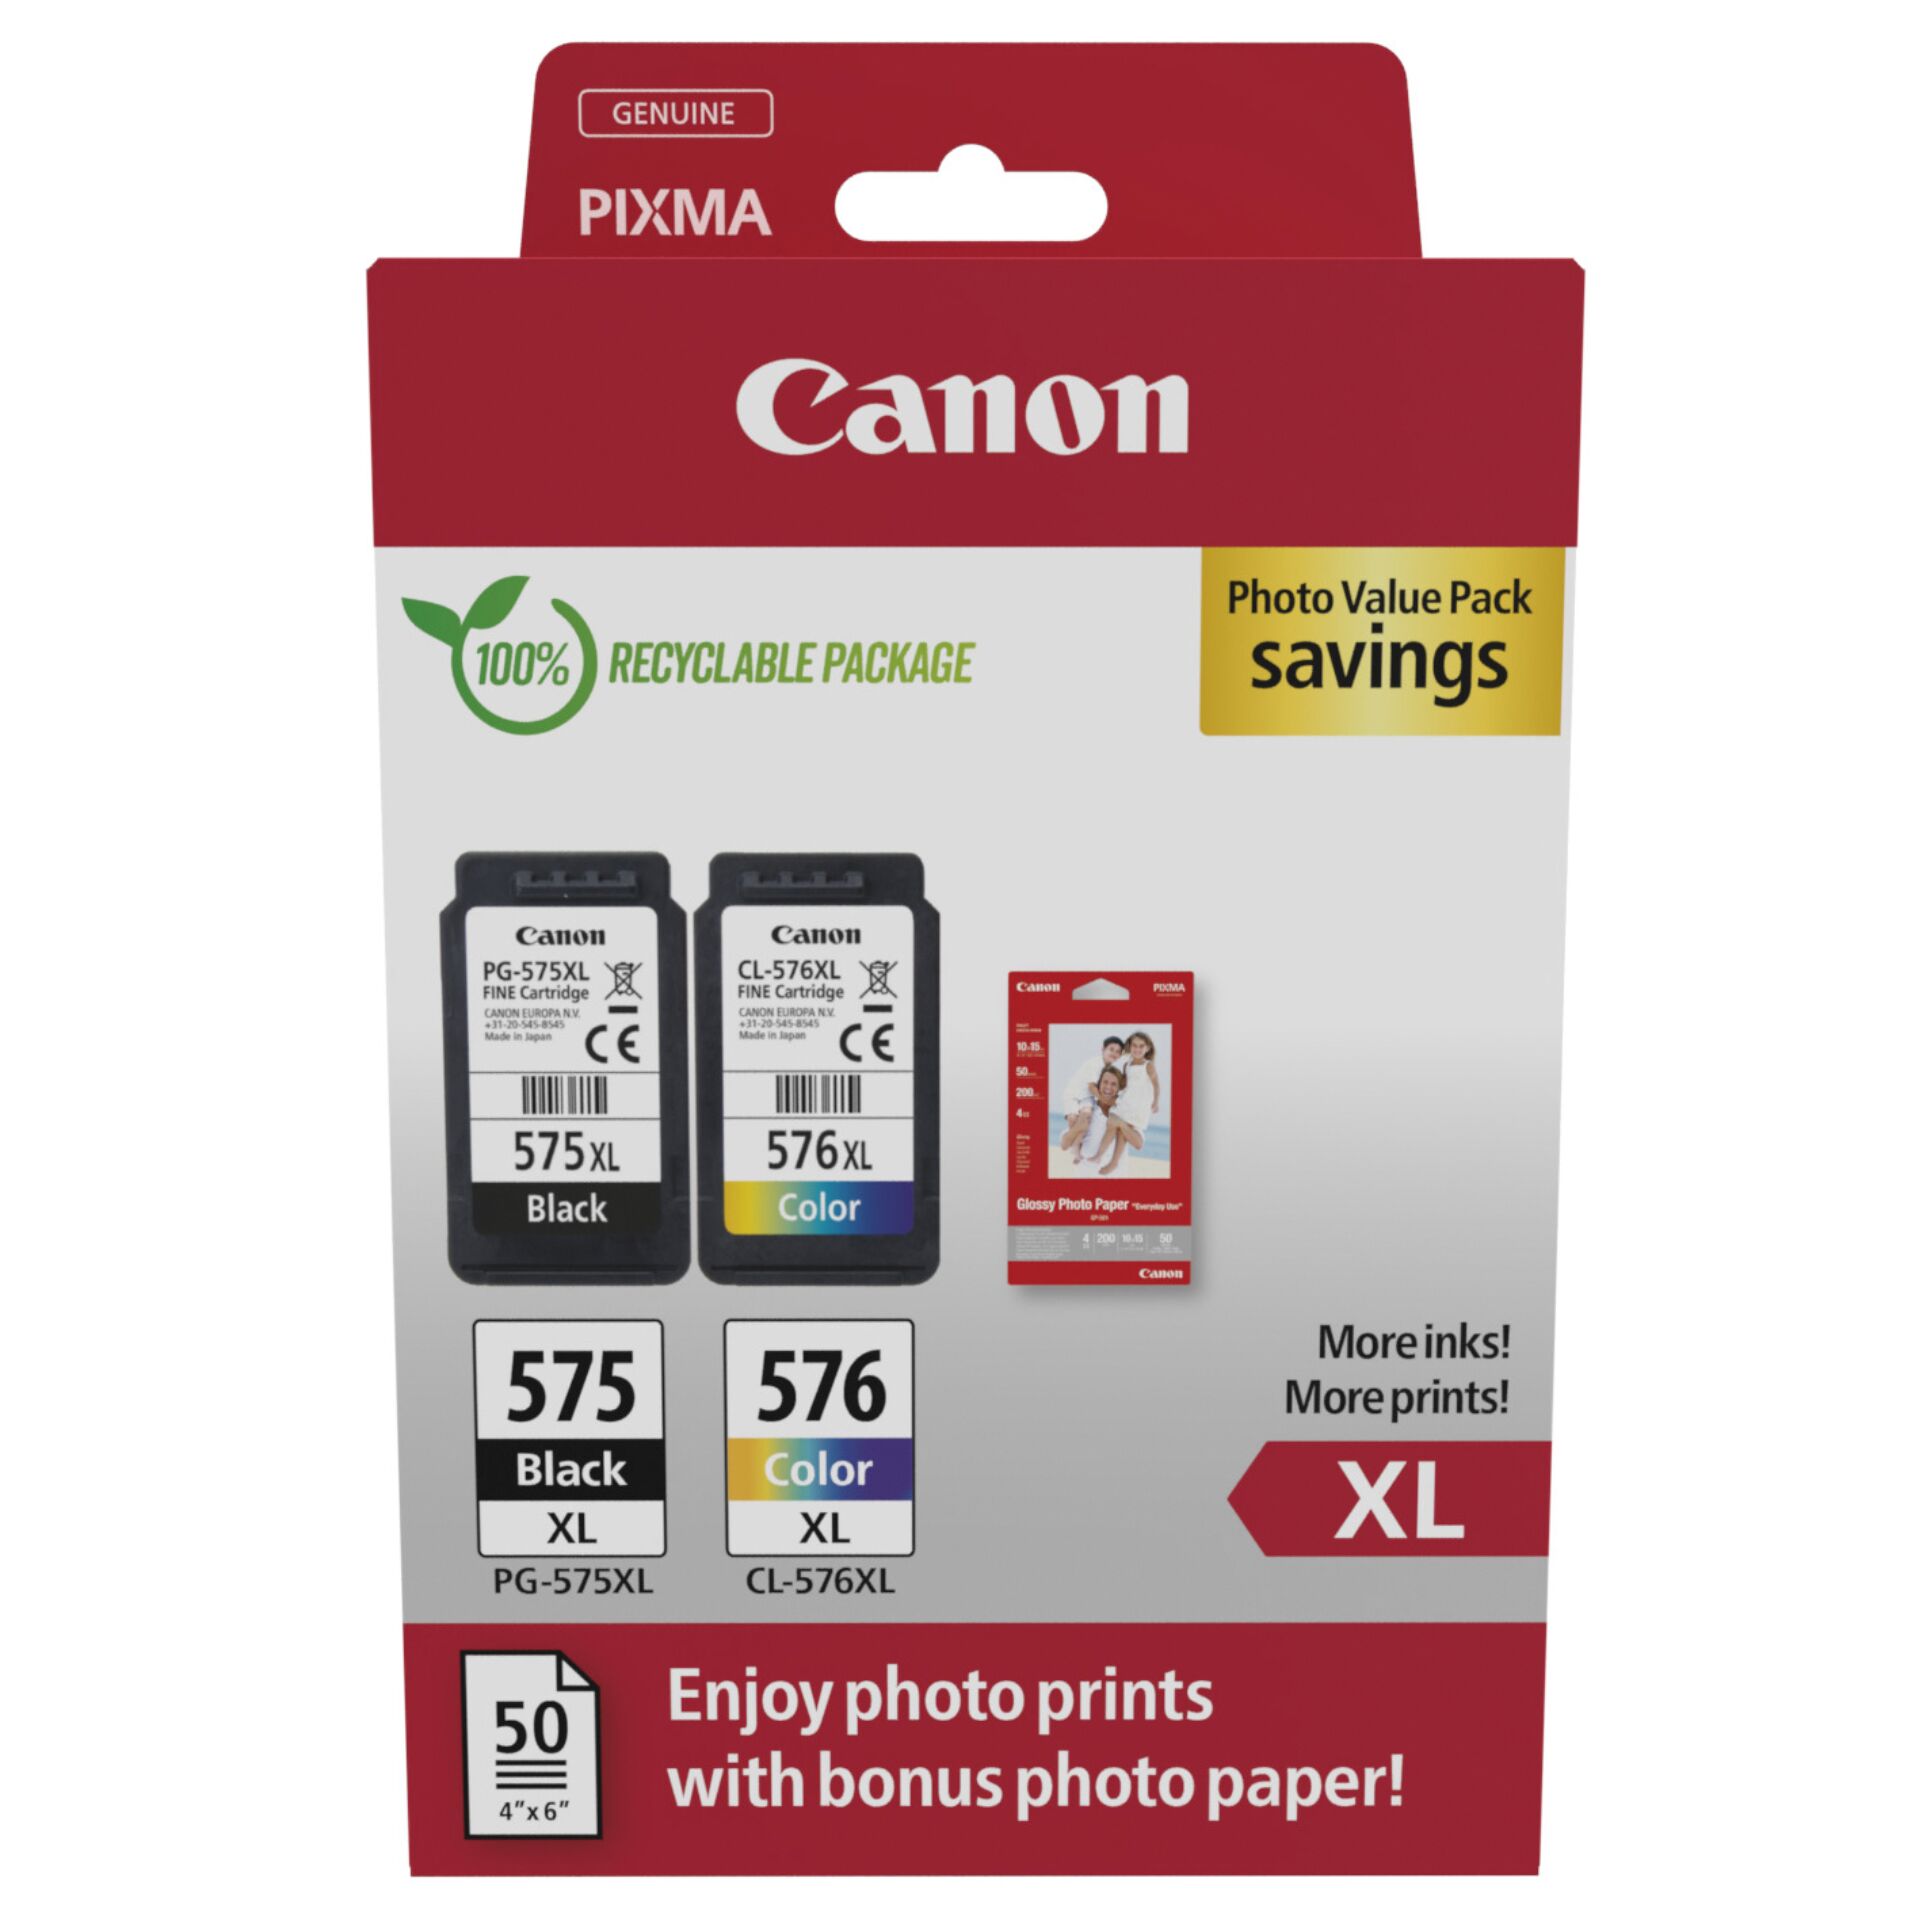 Canon PG-575 XL / CL-576 XL Photo Value Pack